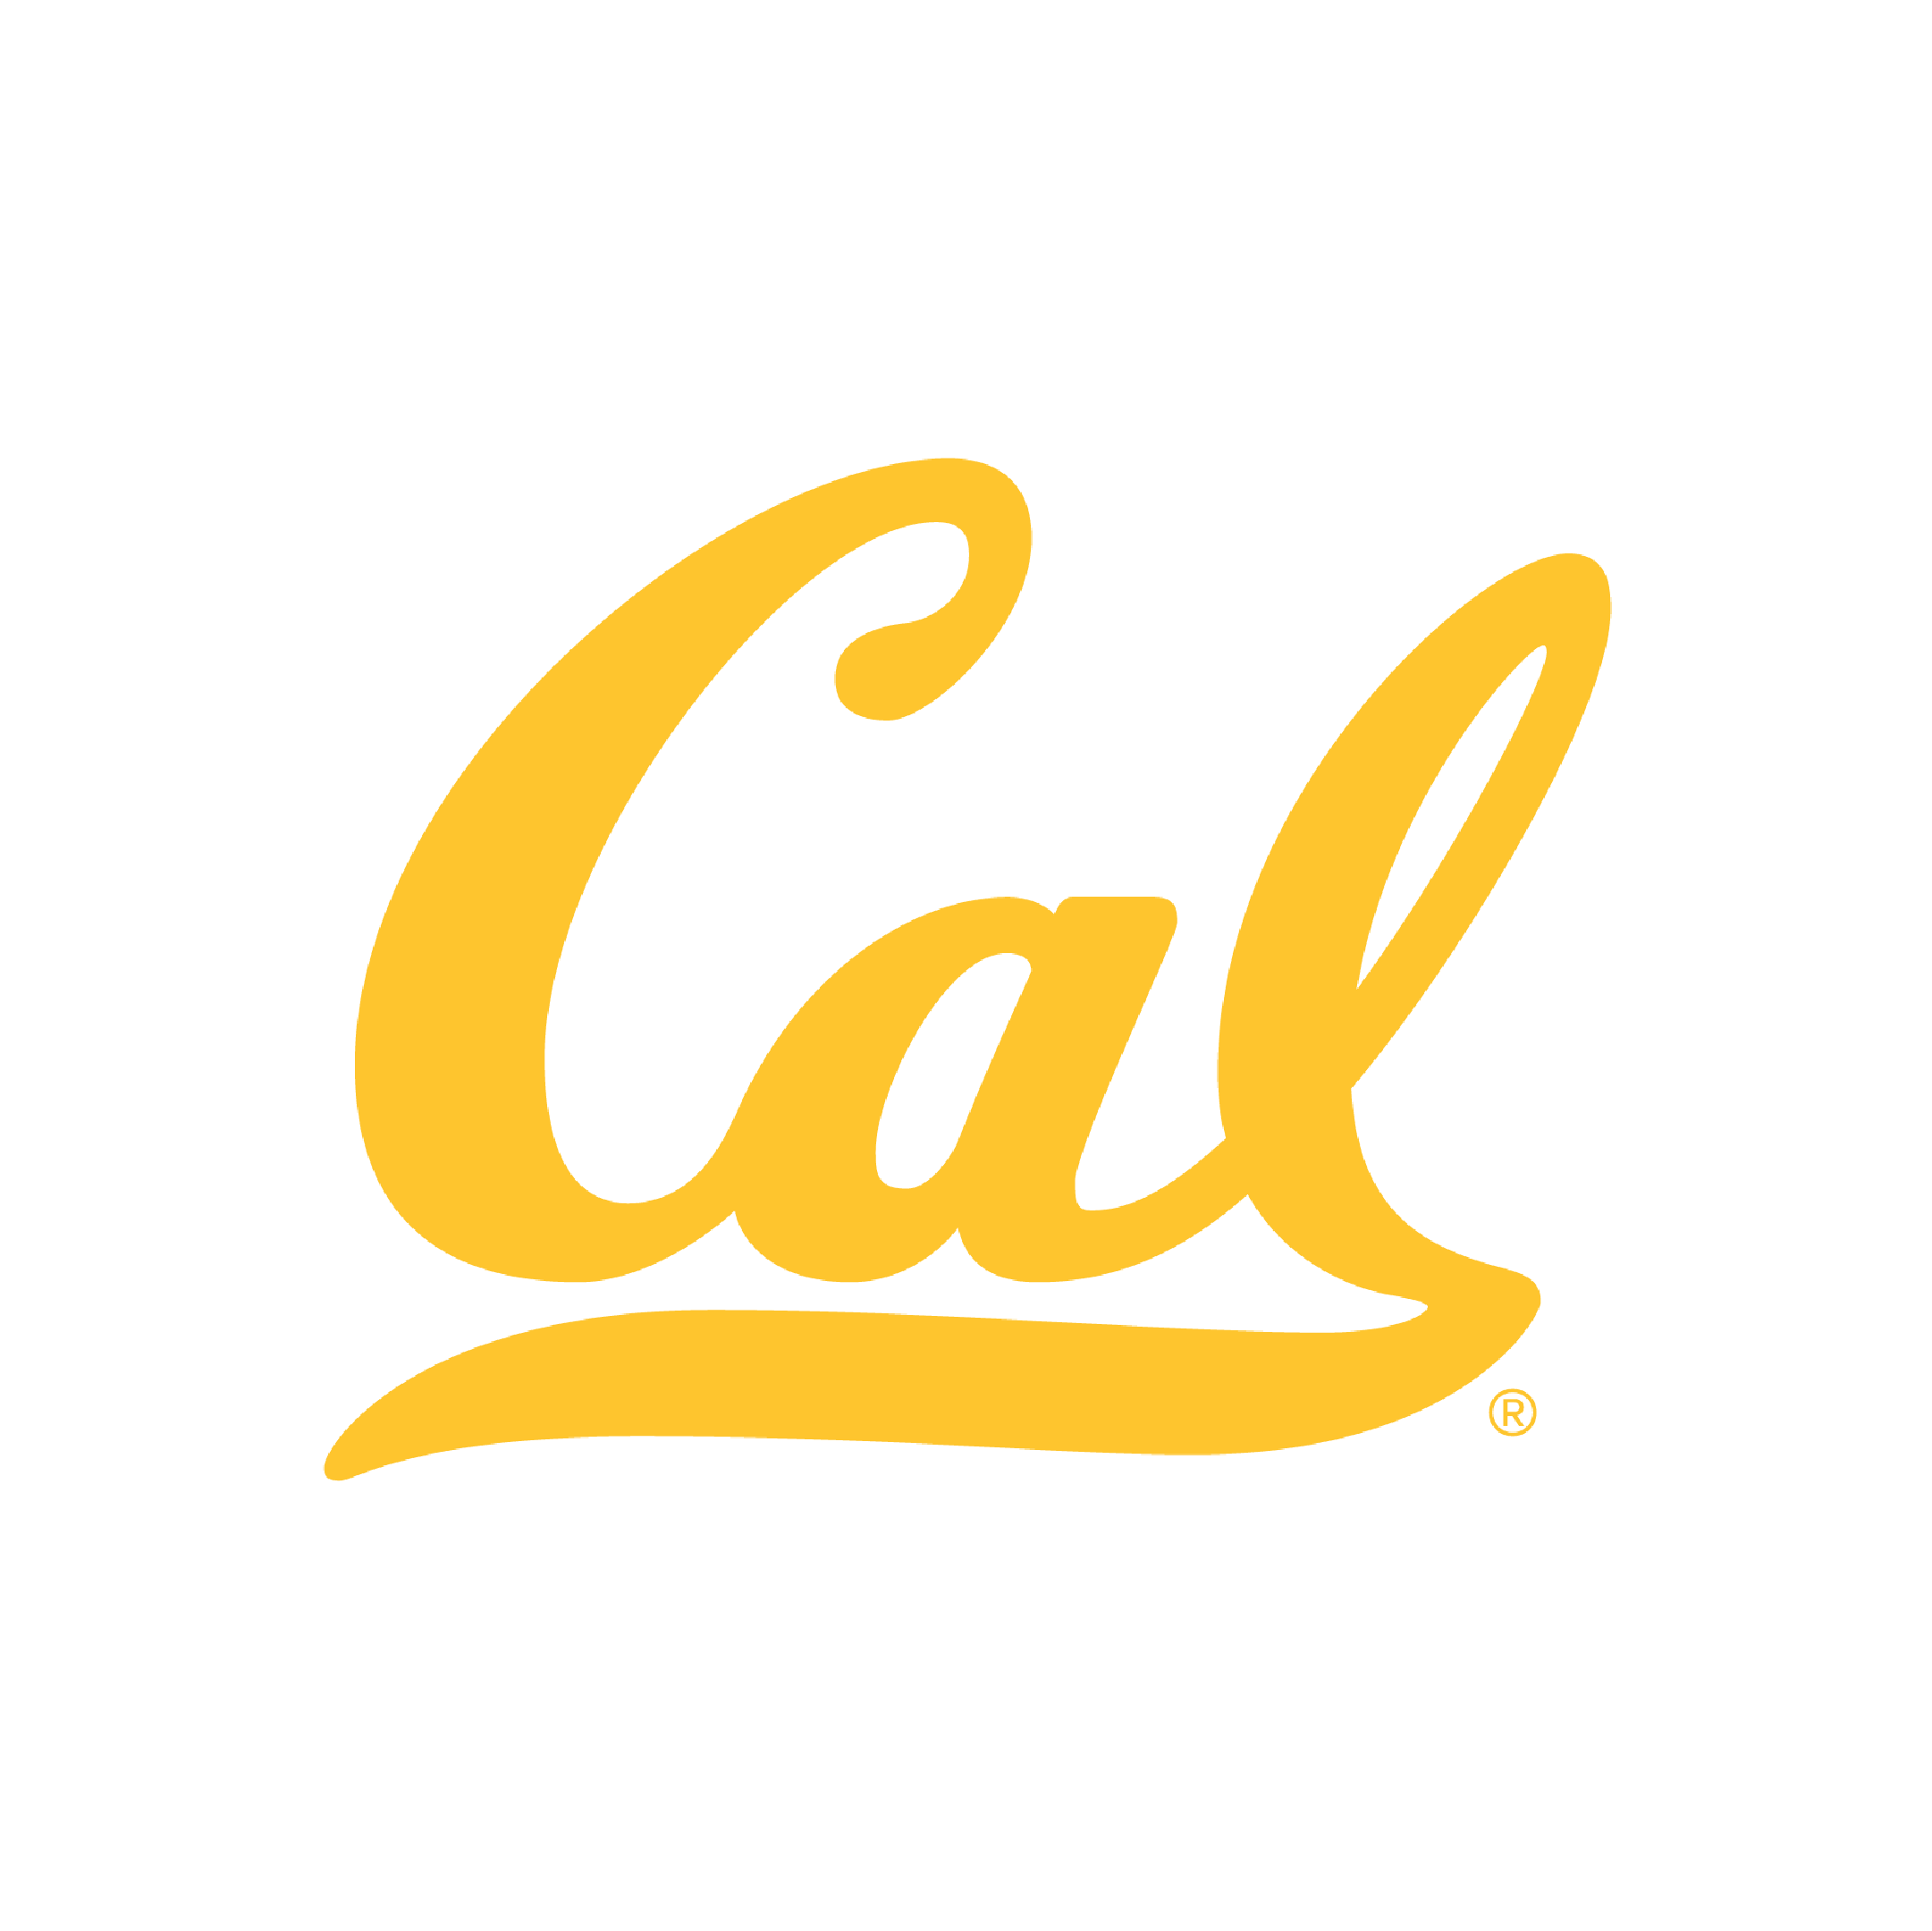 "CALegends" program that benefits Cal athletes